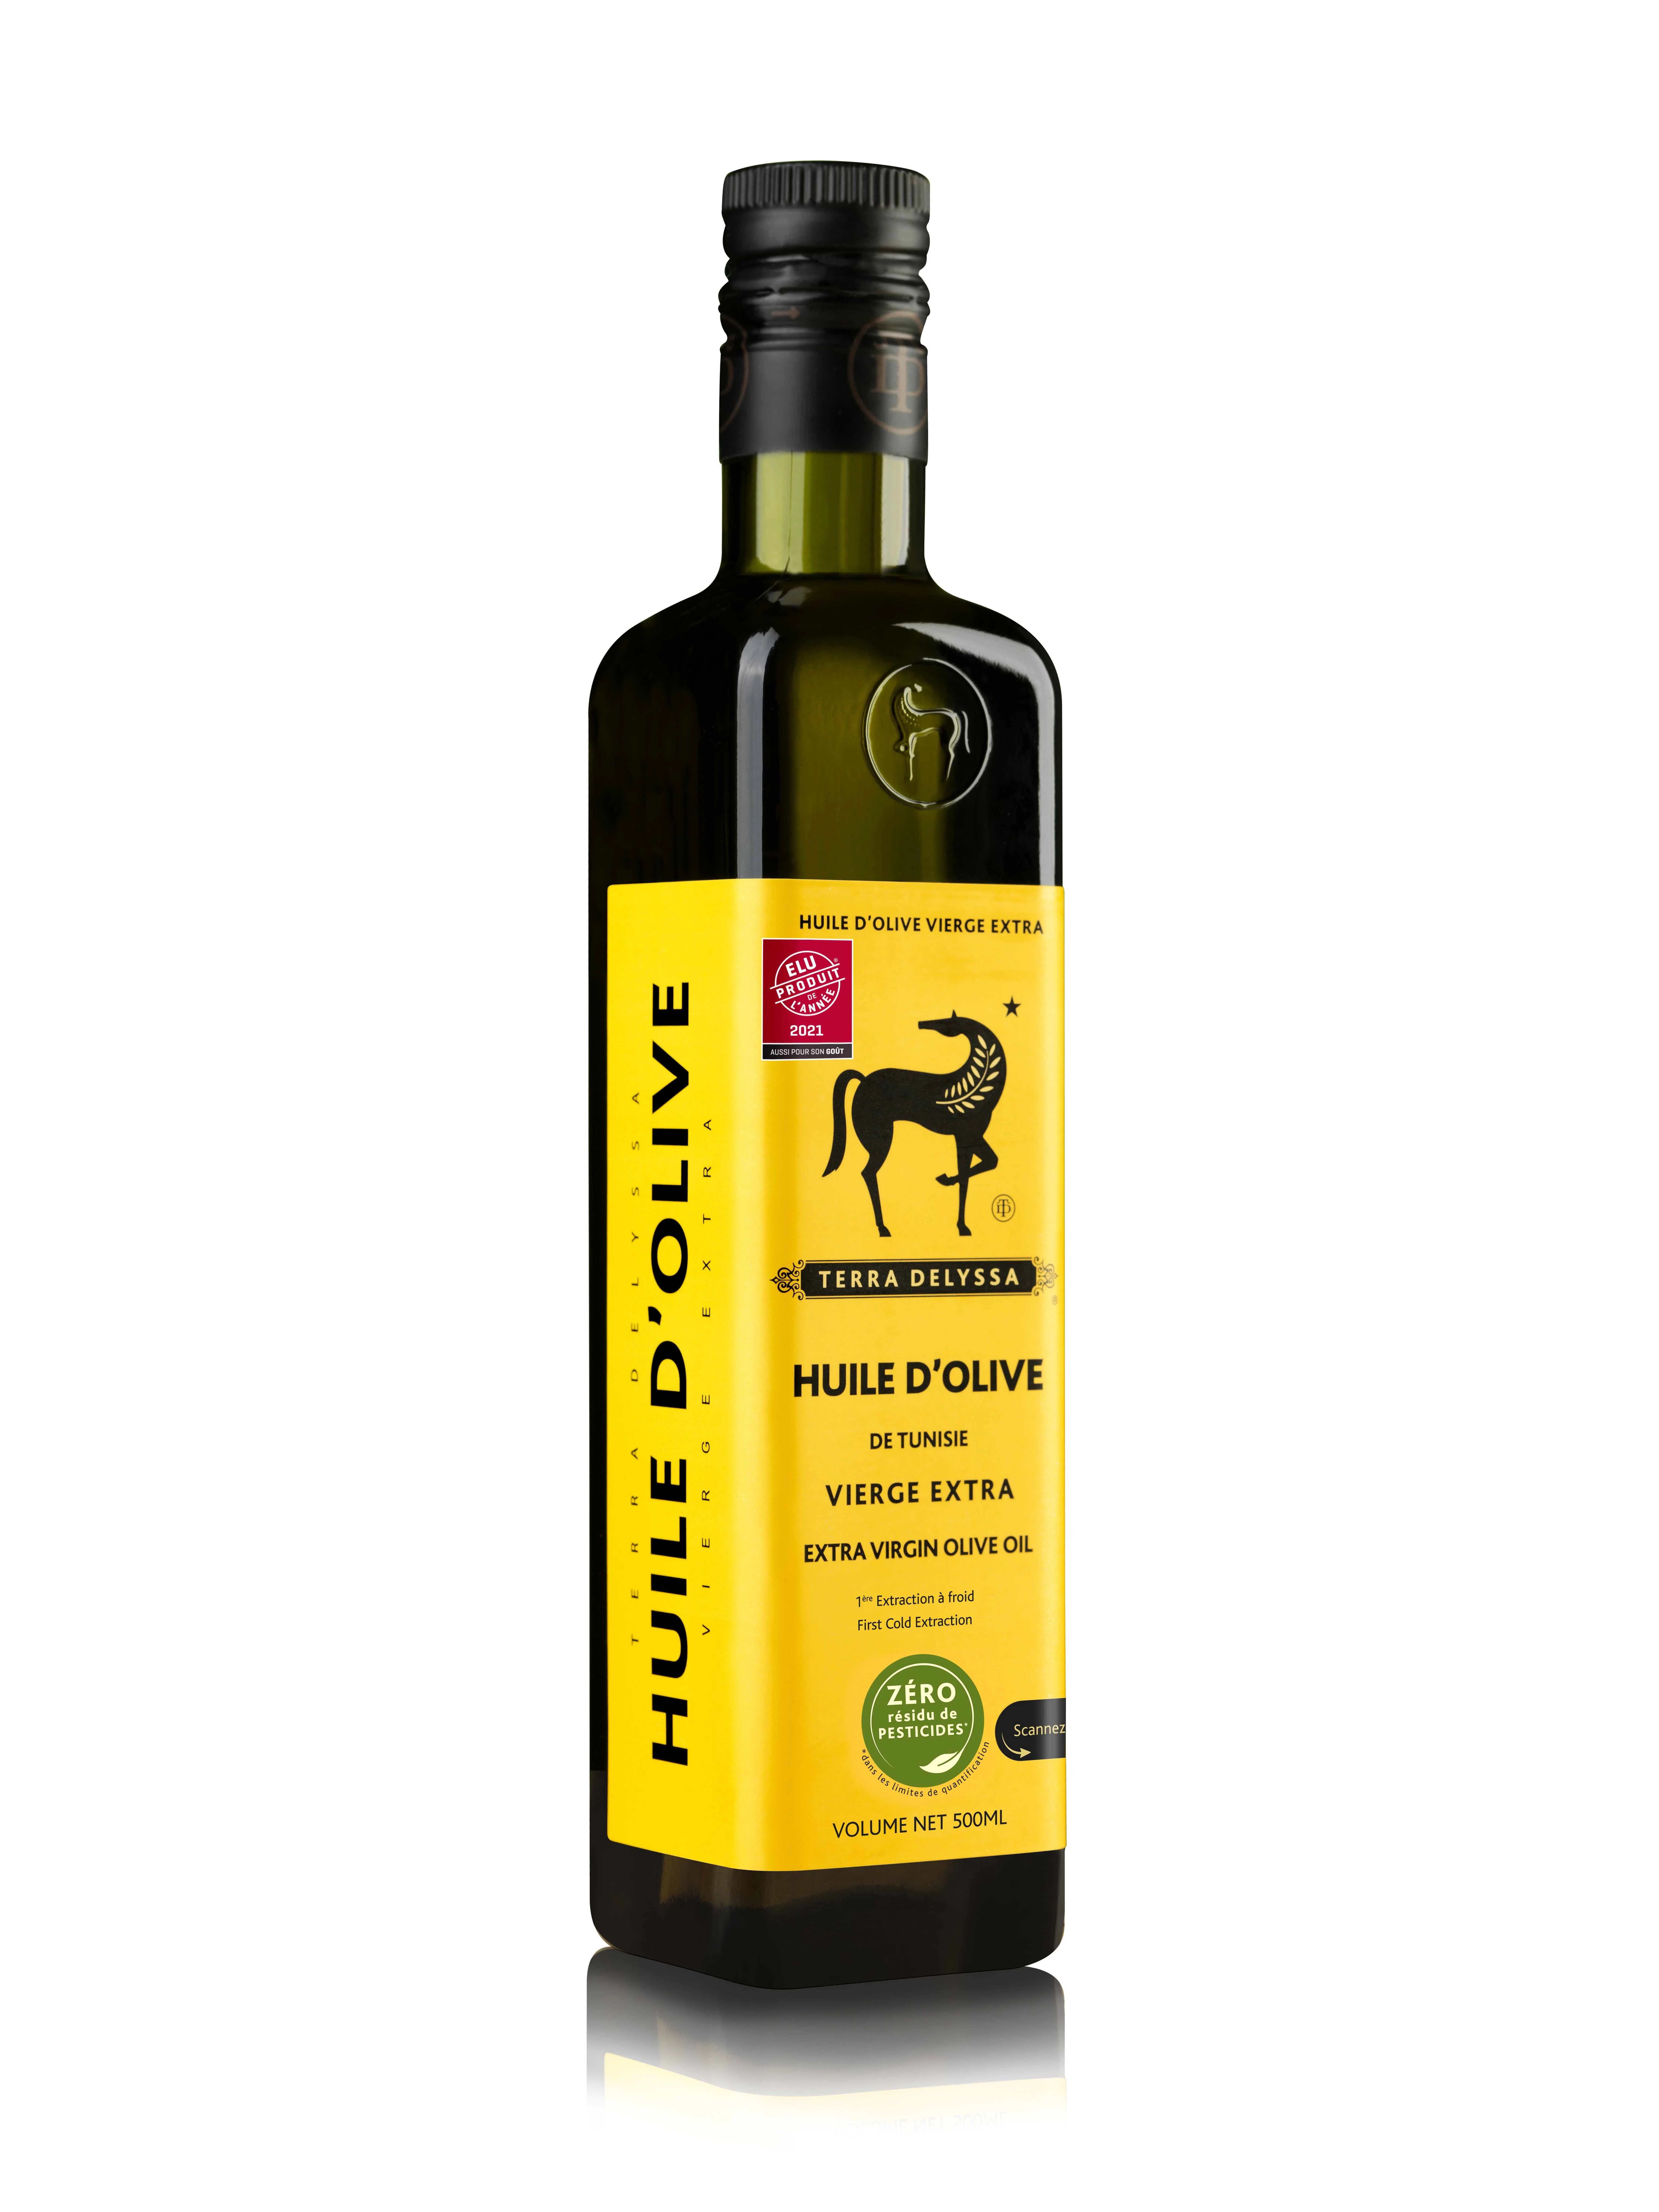 Huile d'olive extra vierge 500ml - TERRA DELYSSA